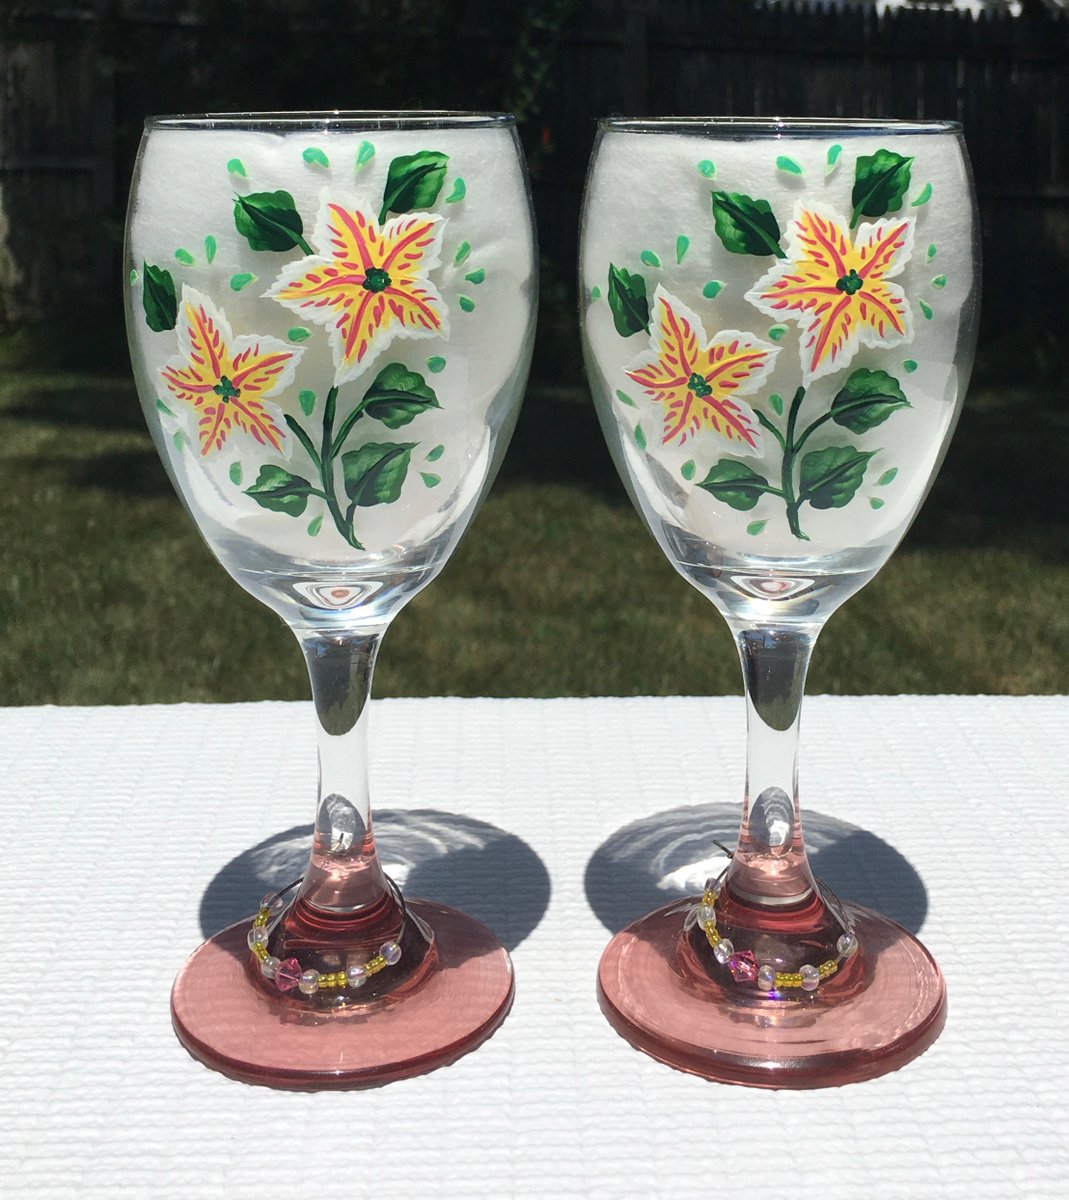 etsy.com/listing/242646… #wineglasses #summerglasses #paintedglasses #SMILEtt23 #MothersDay #CraftBizParty #etsyshop